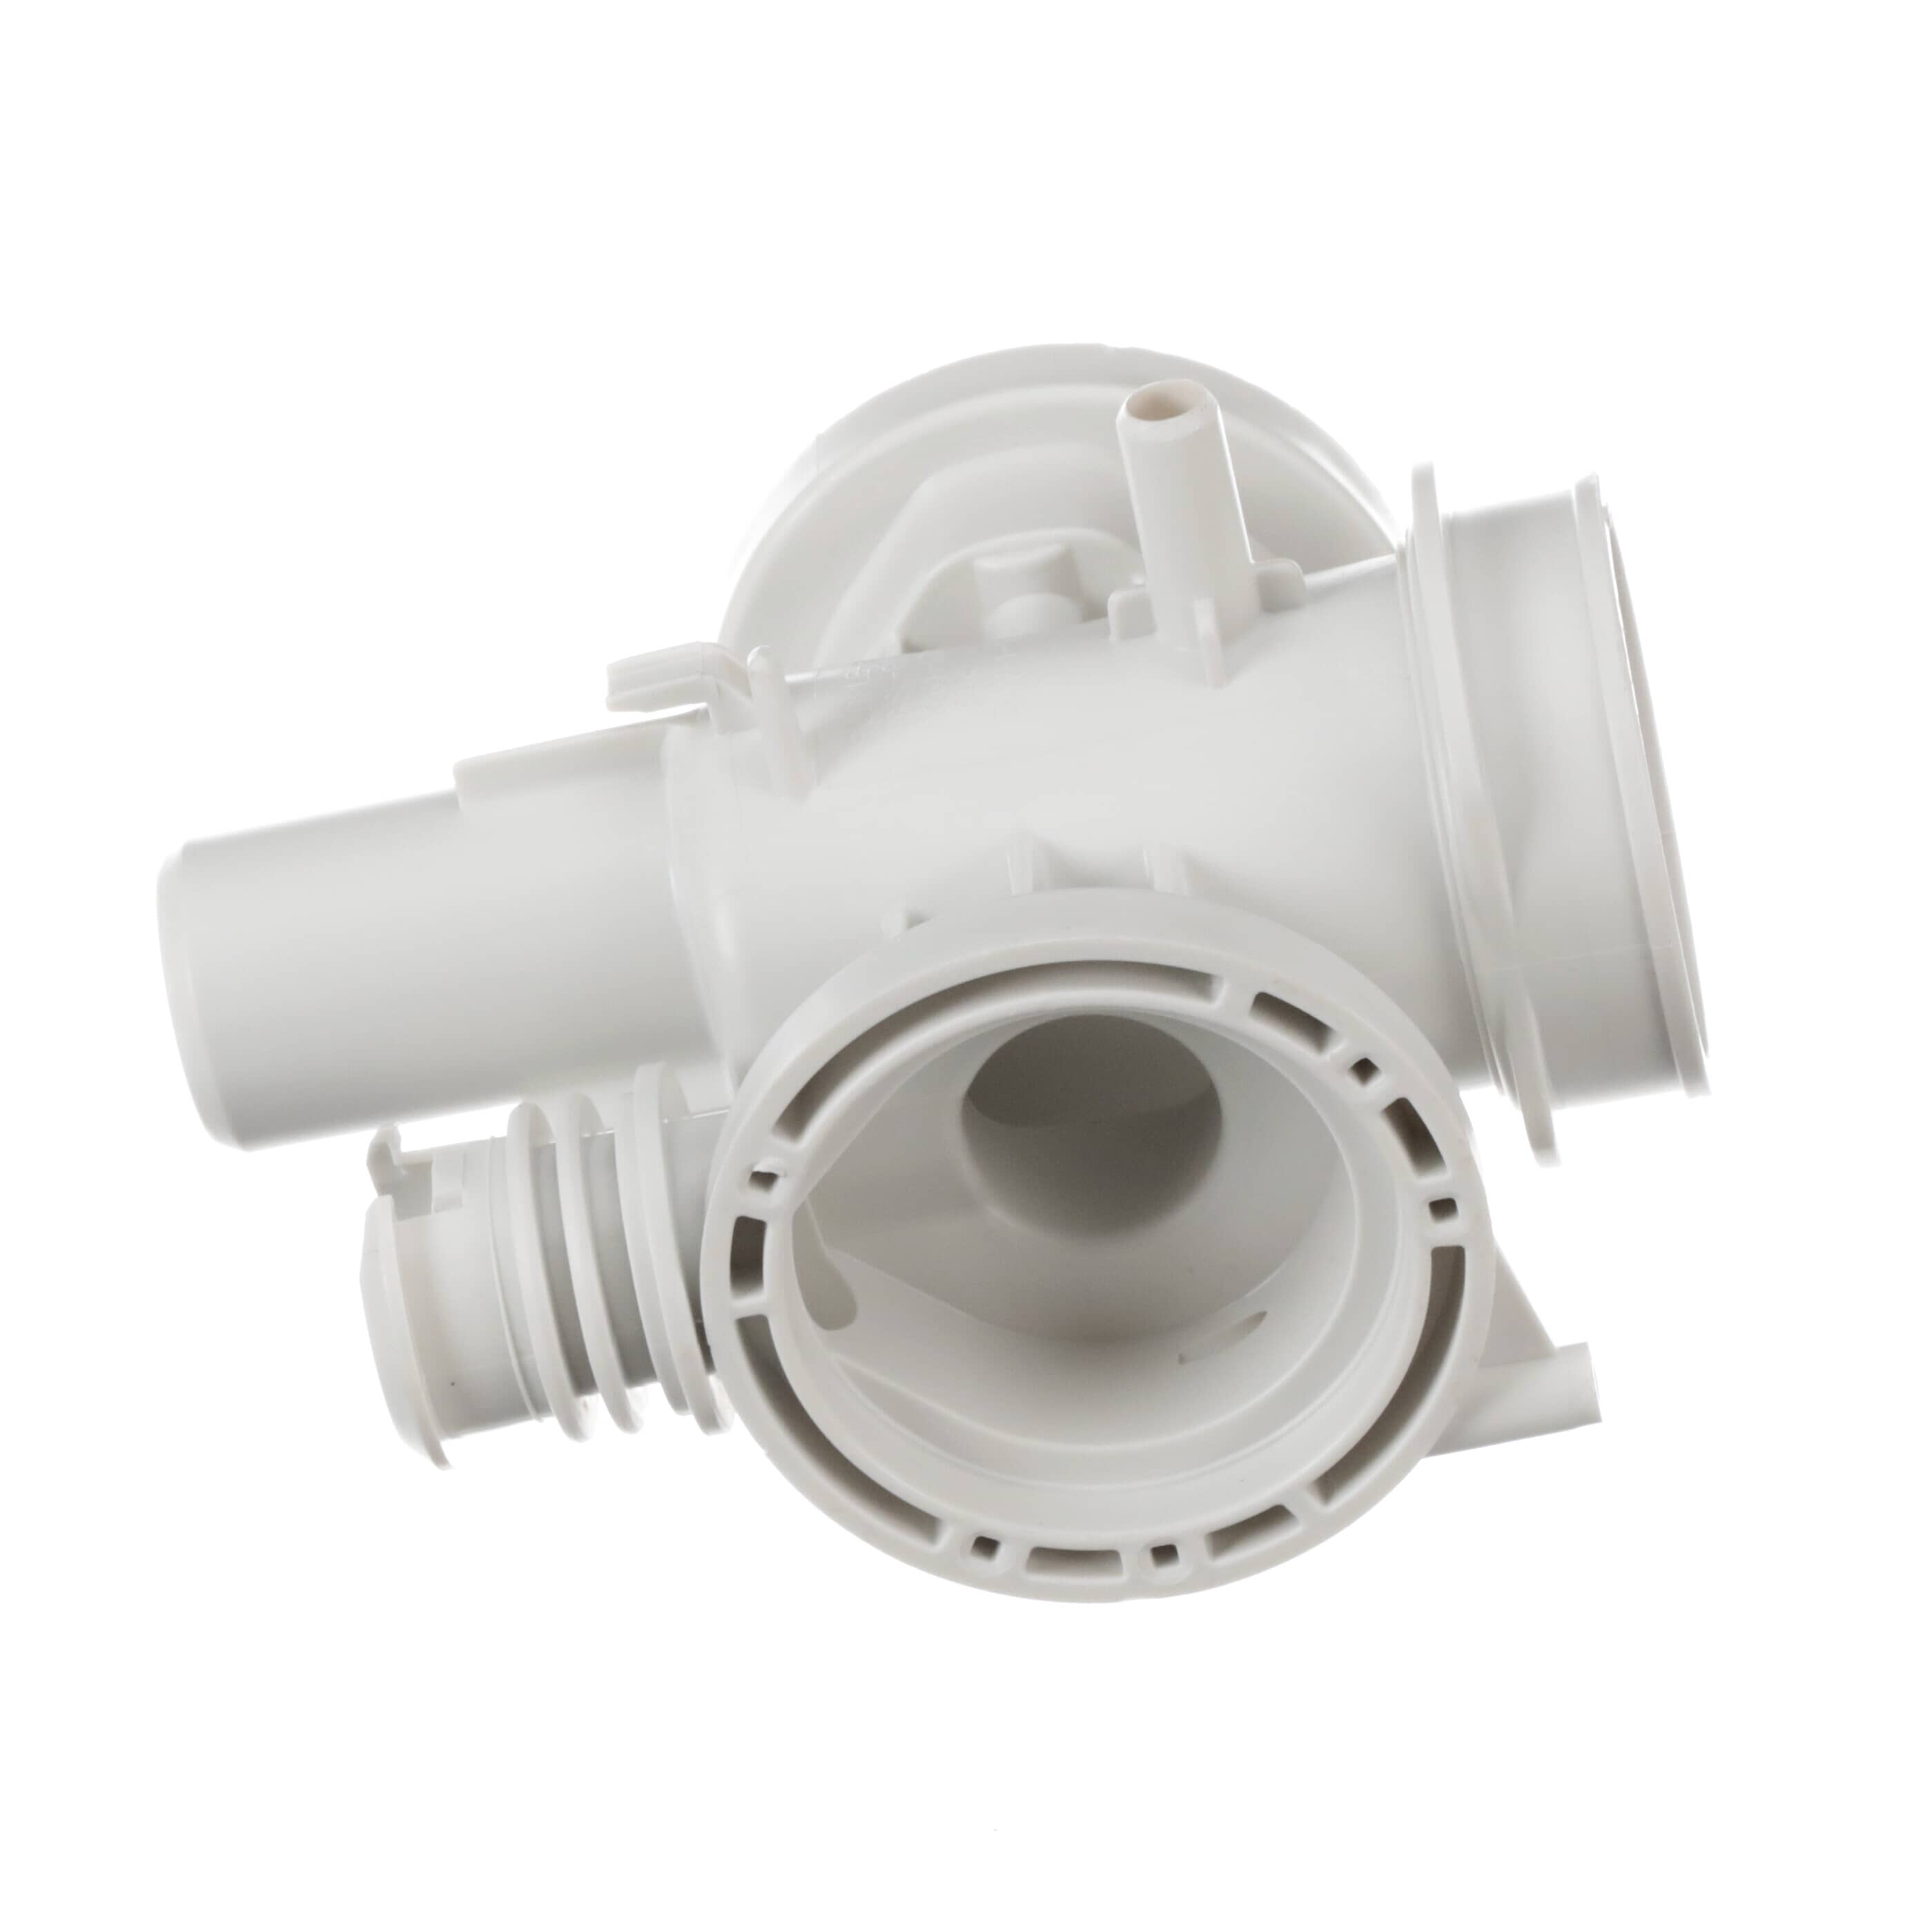 DC61-02017E Washer Drain Pump Filter - Samsung Parts USA